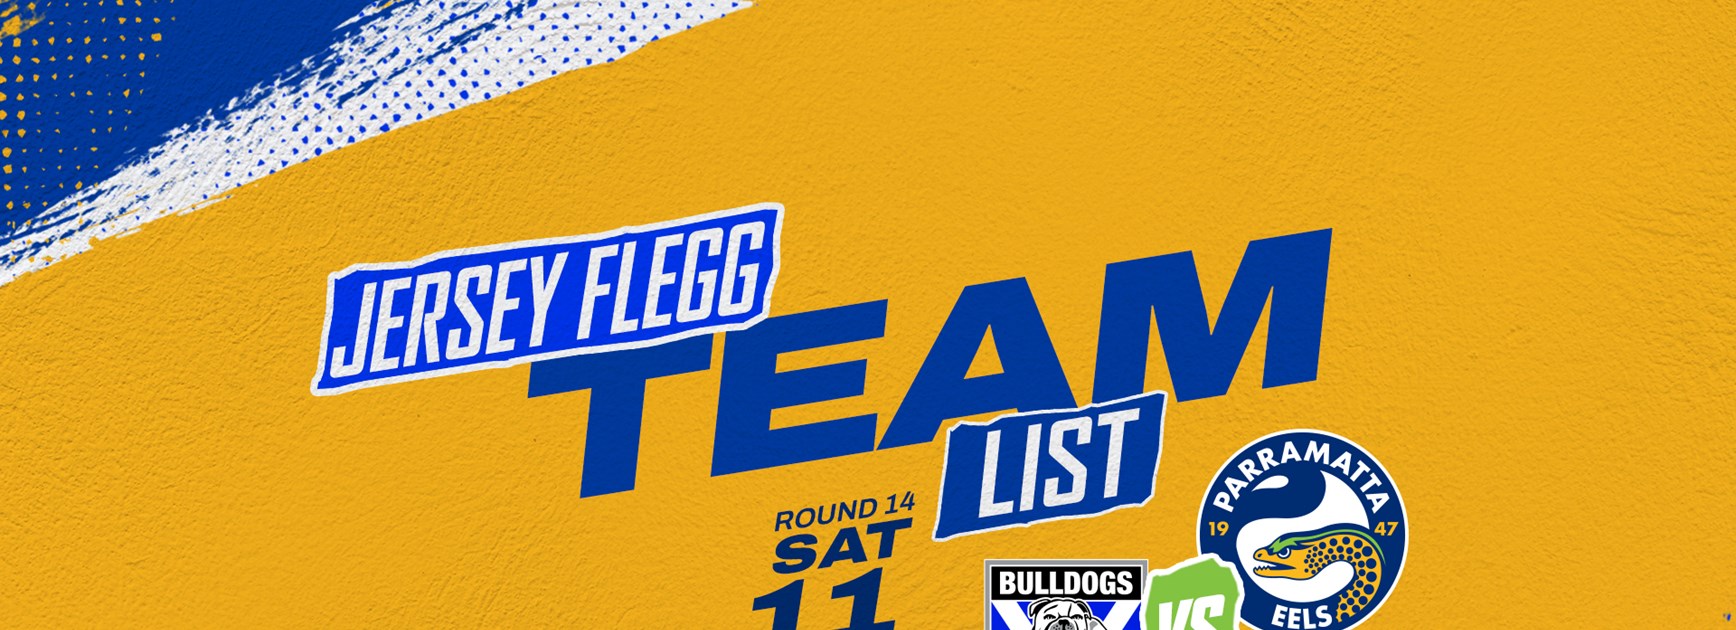 Jersey Flegg Cup Team List - Bulldogs v Eels, Round 14